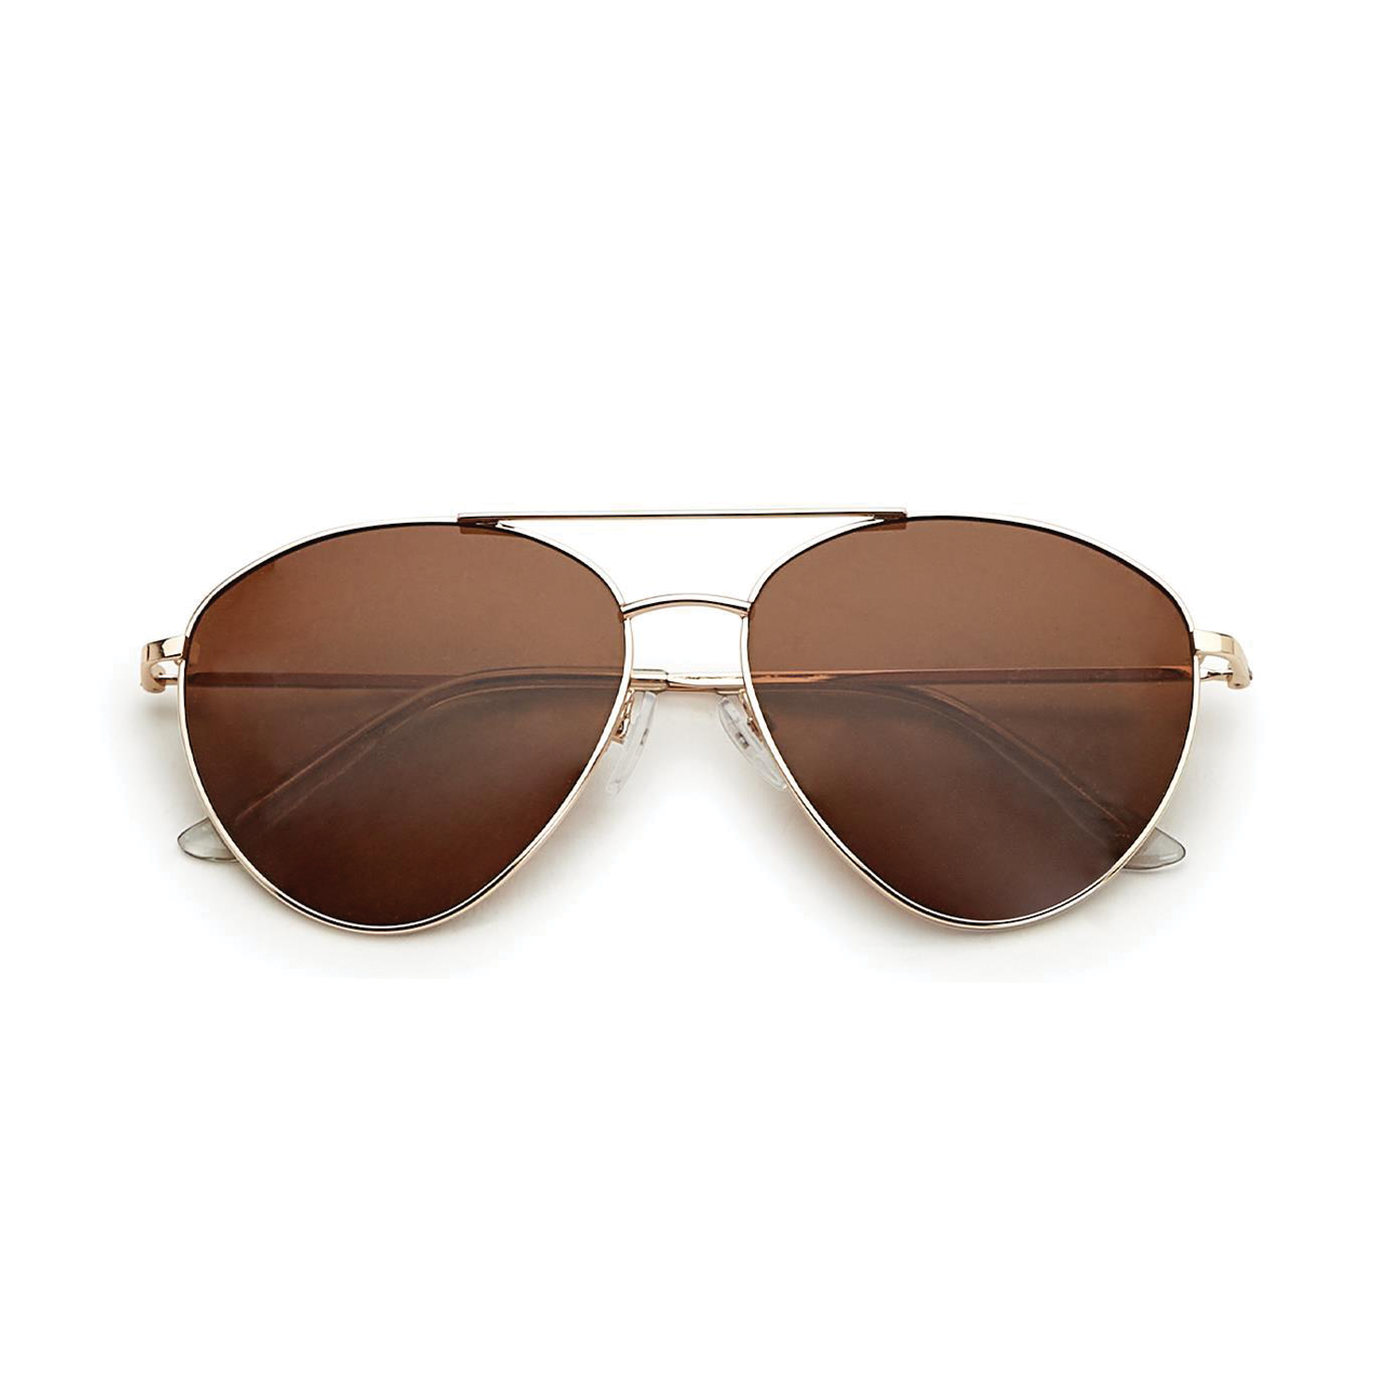 Gold Frame Aviator Sunglasses - Brown Lens